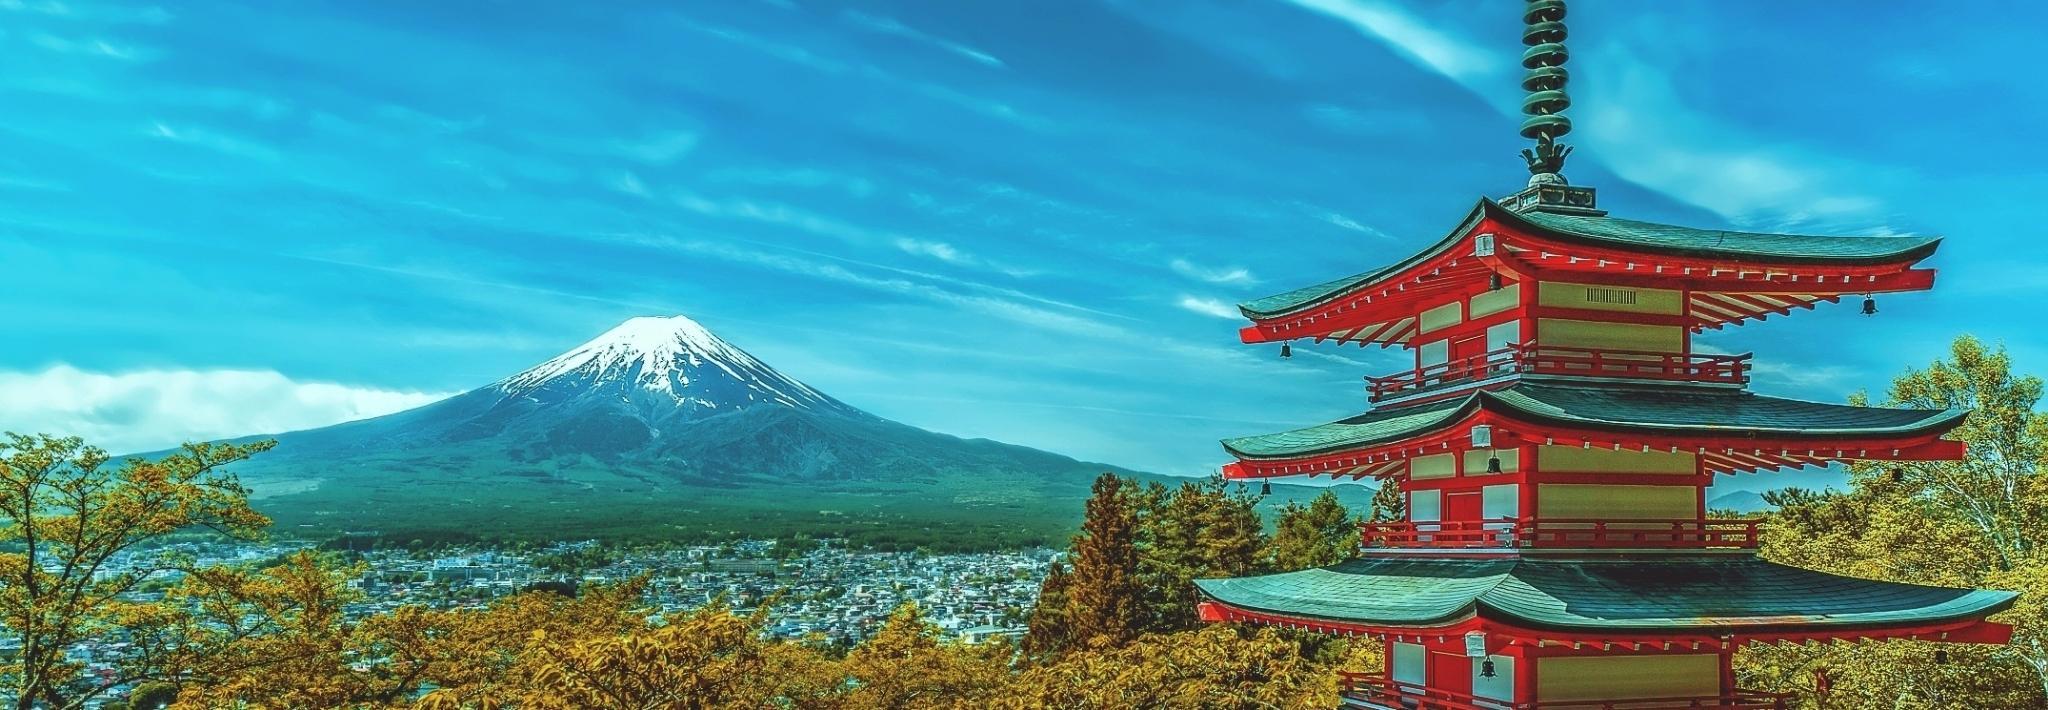 Mount Fuji and Pagoda